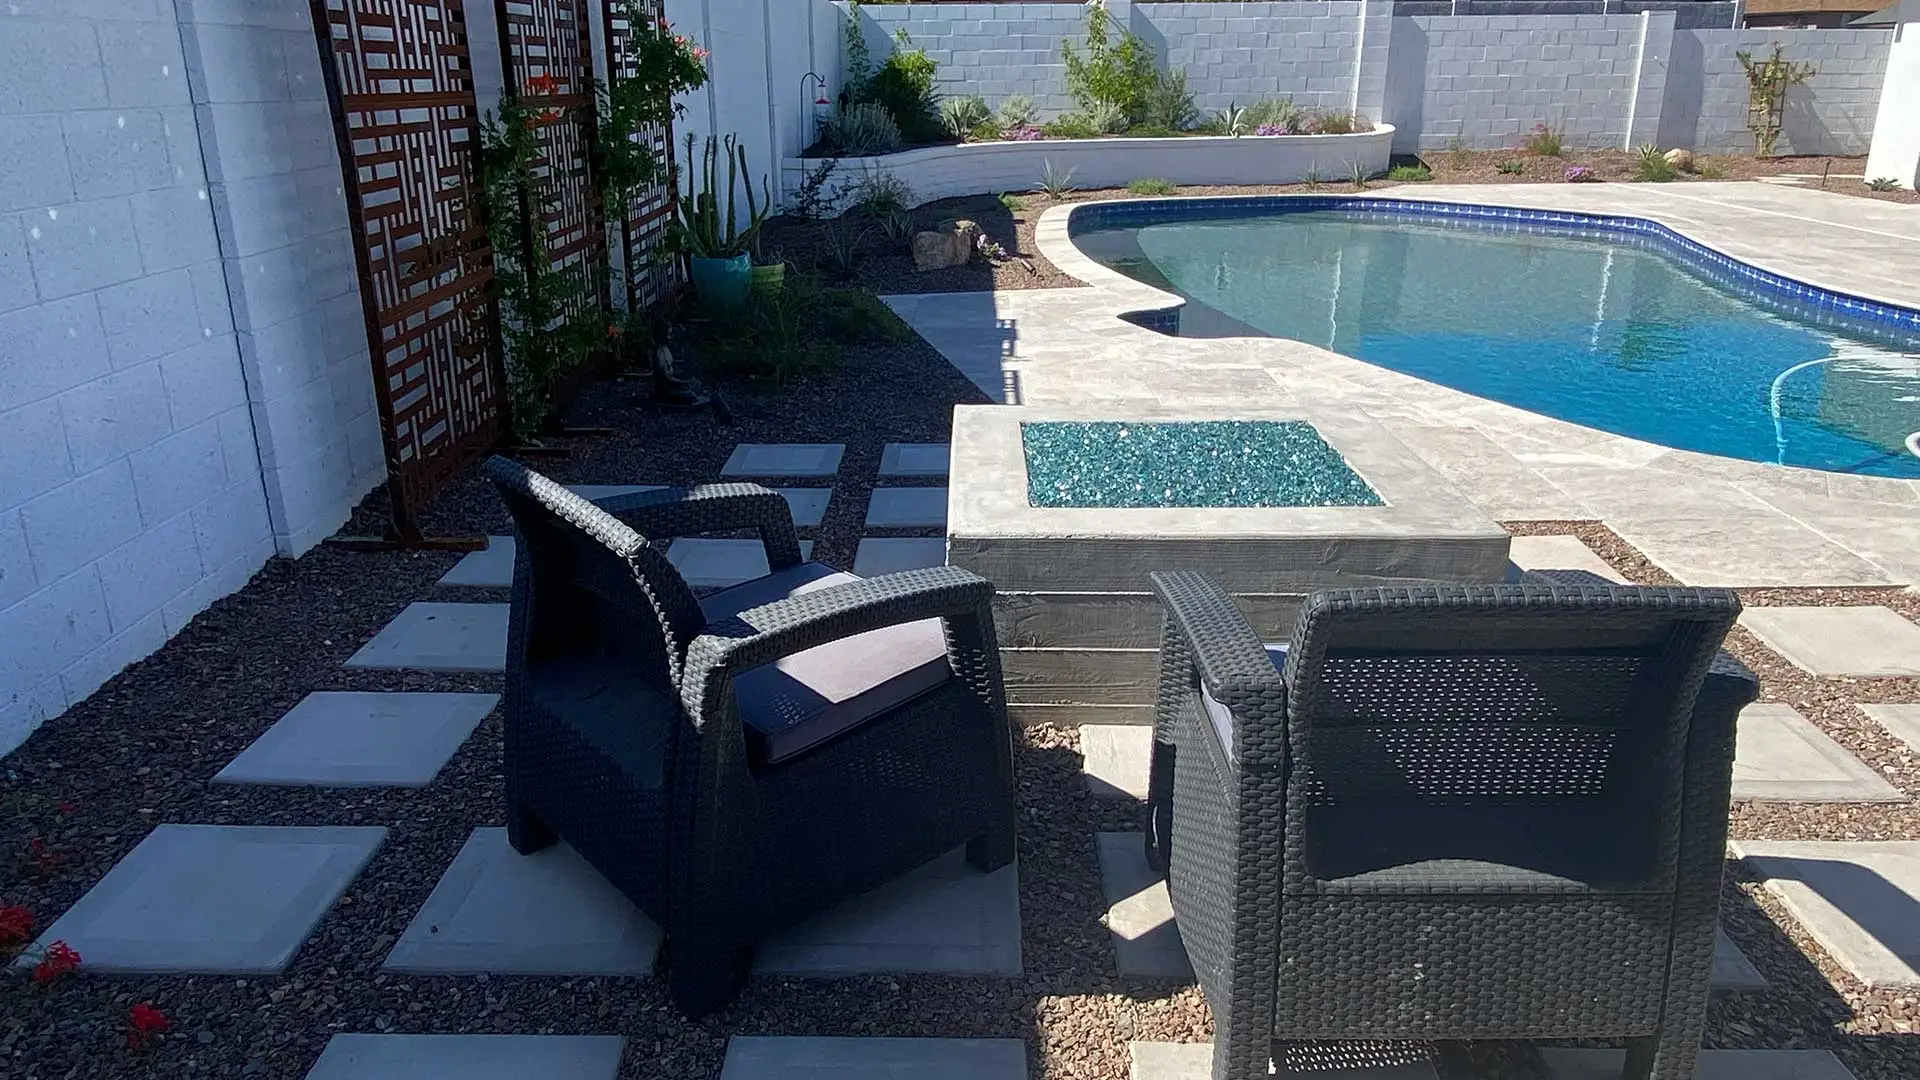 Swimming pool with custom patio and landscape design near Phoenix, AZ.